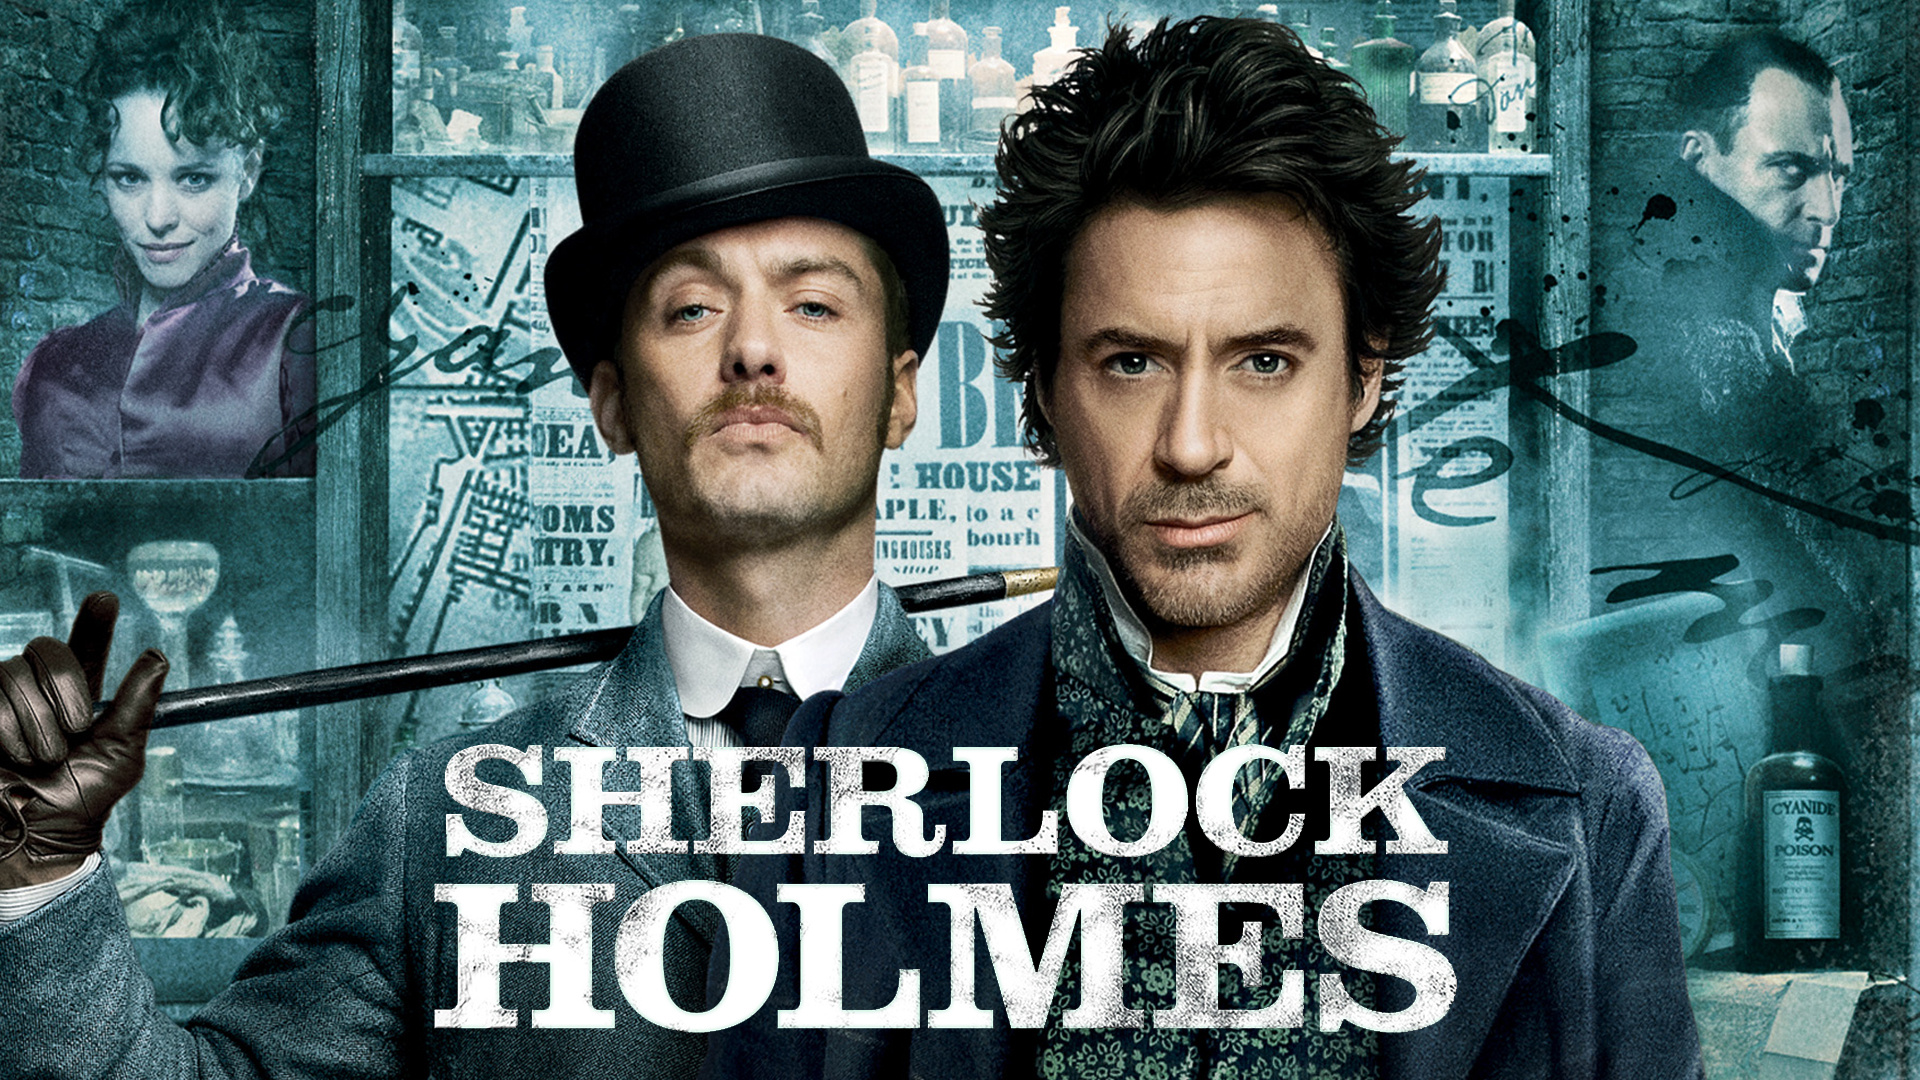 Guy Ritchie movies, Sherlock Holmes, Watch or stream, 1920x1080 Full HD Desktop